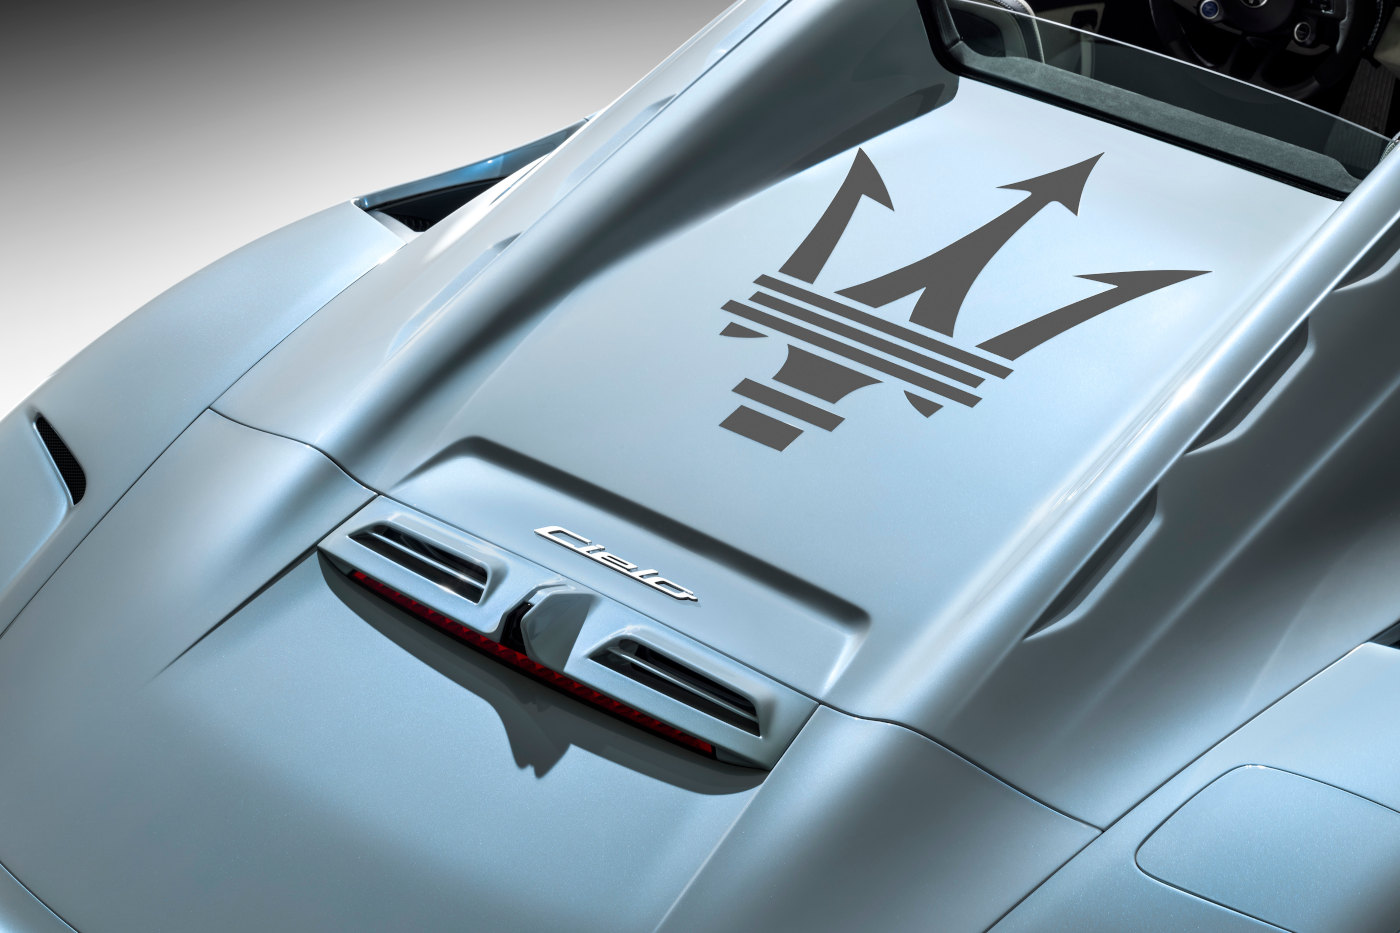 Maserati Spyder MC20 Cielo